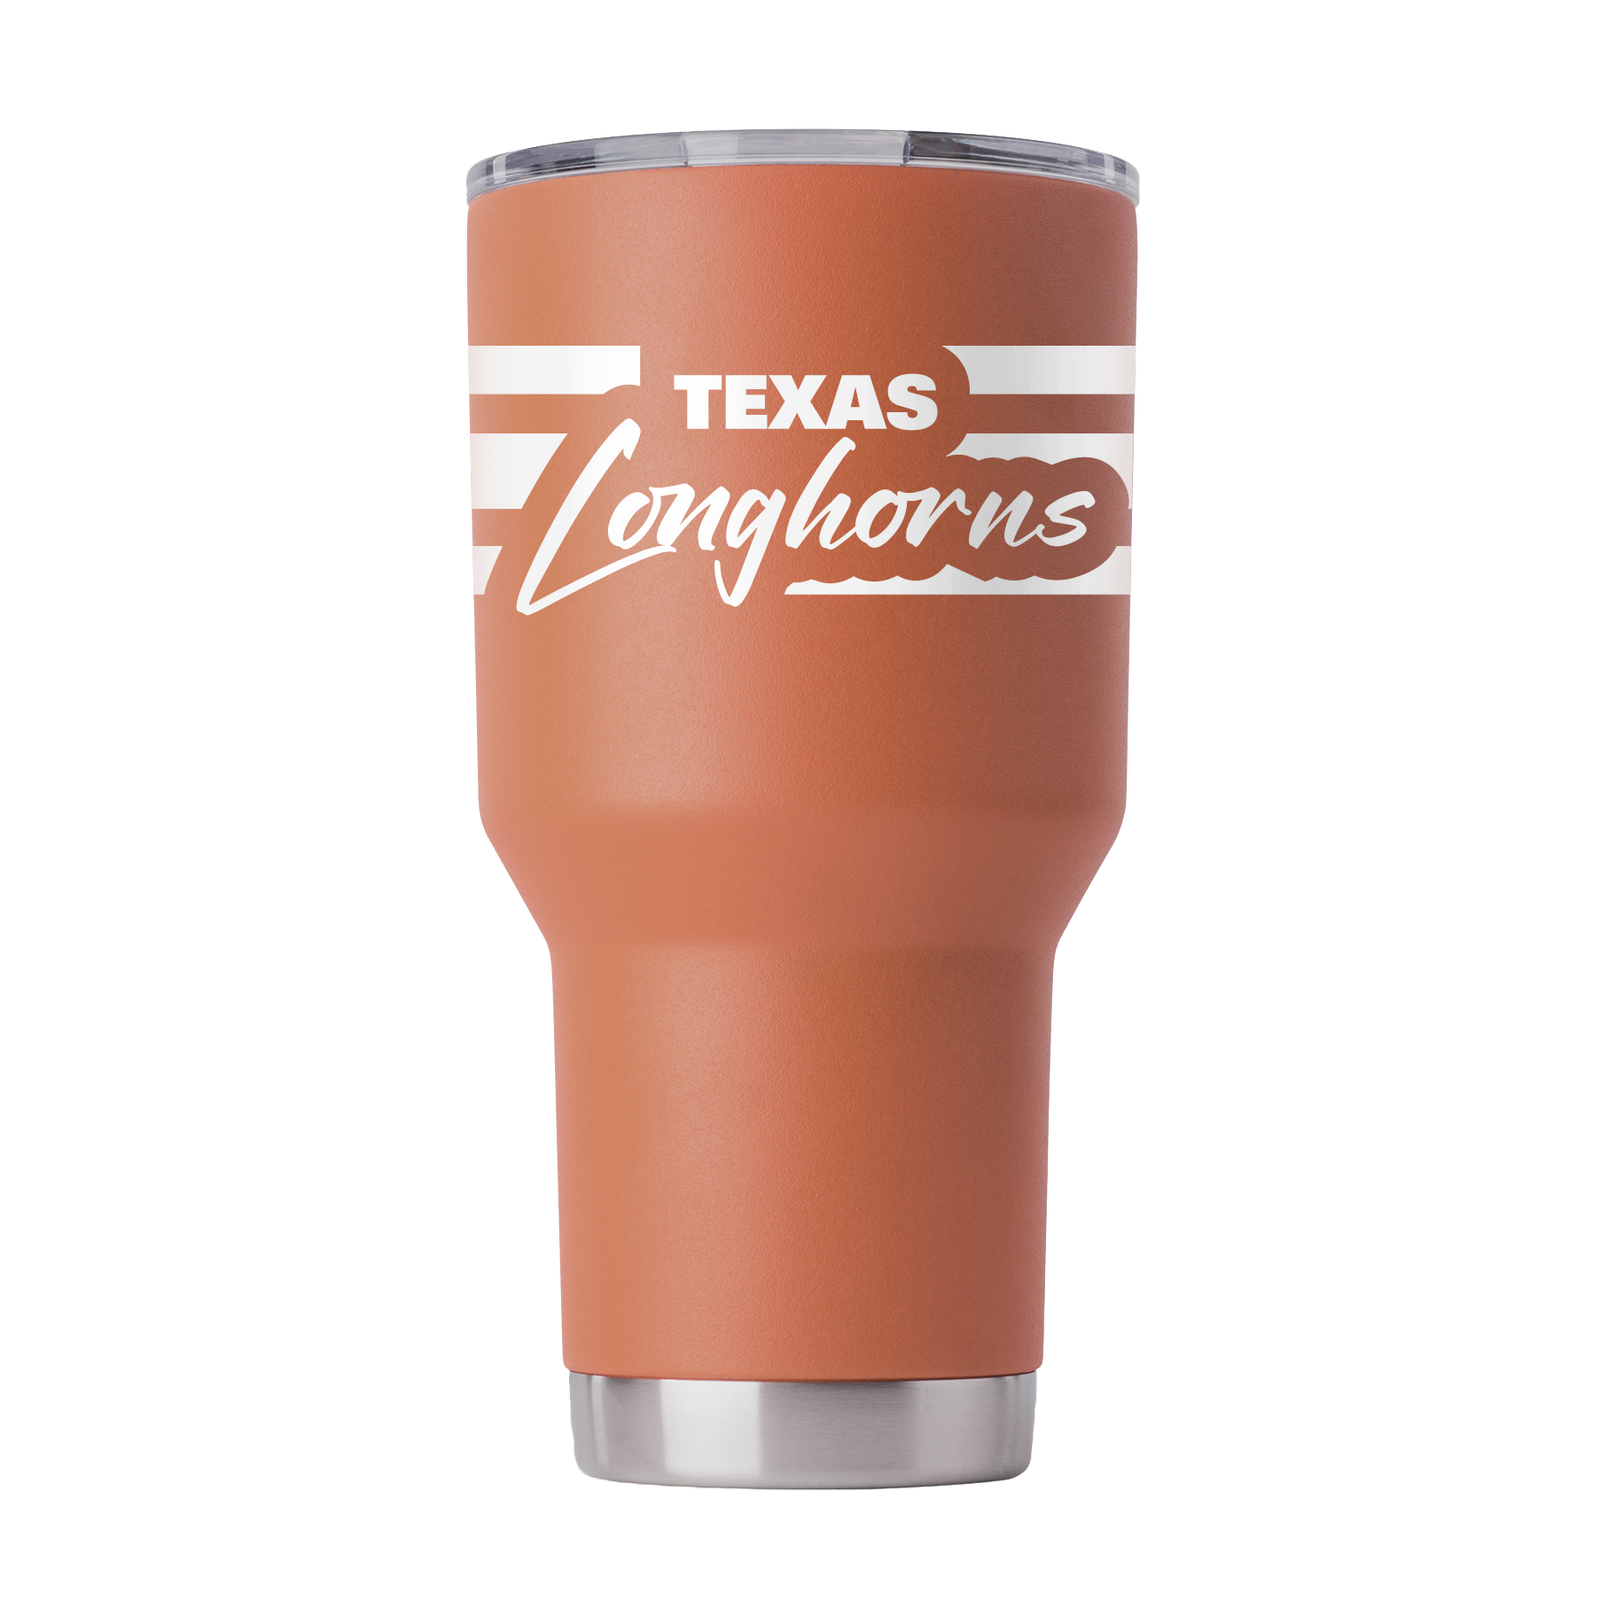 Texas Longhorns Low Ball Tumbler - 12 oz